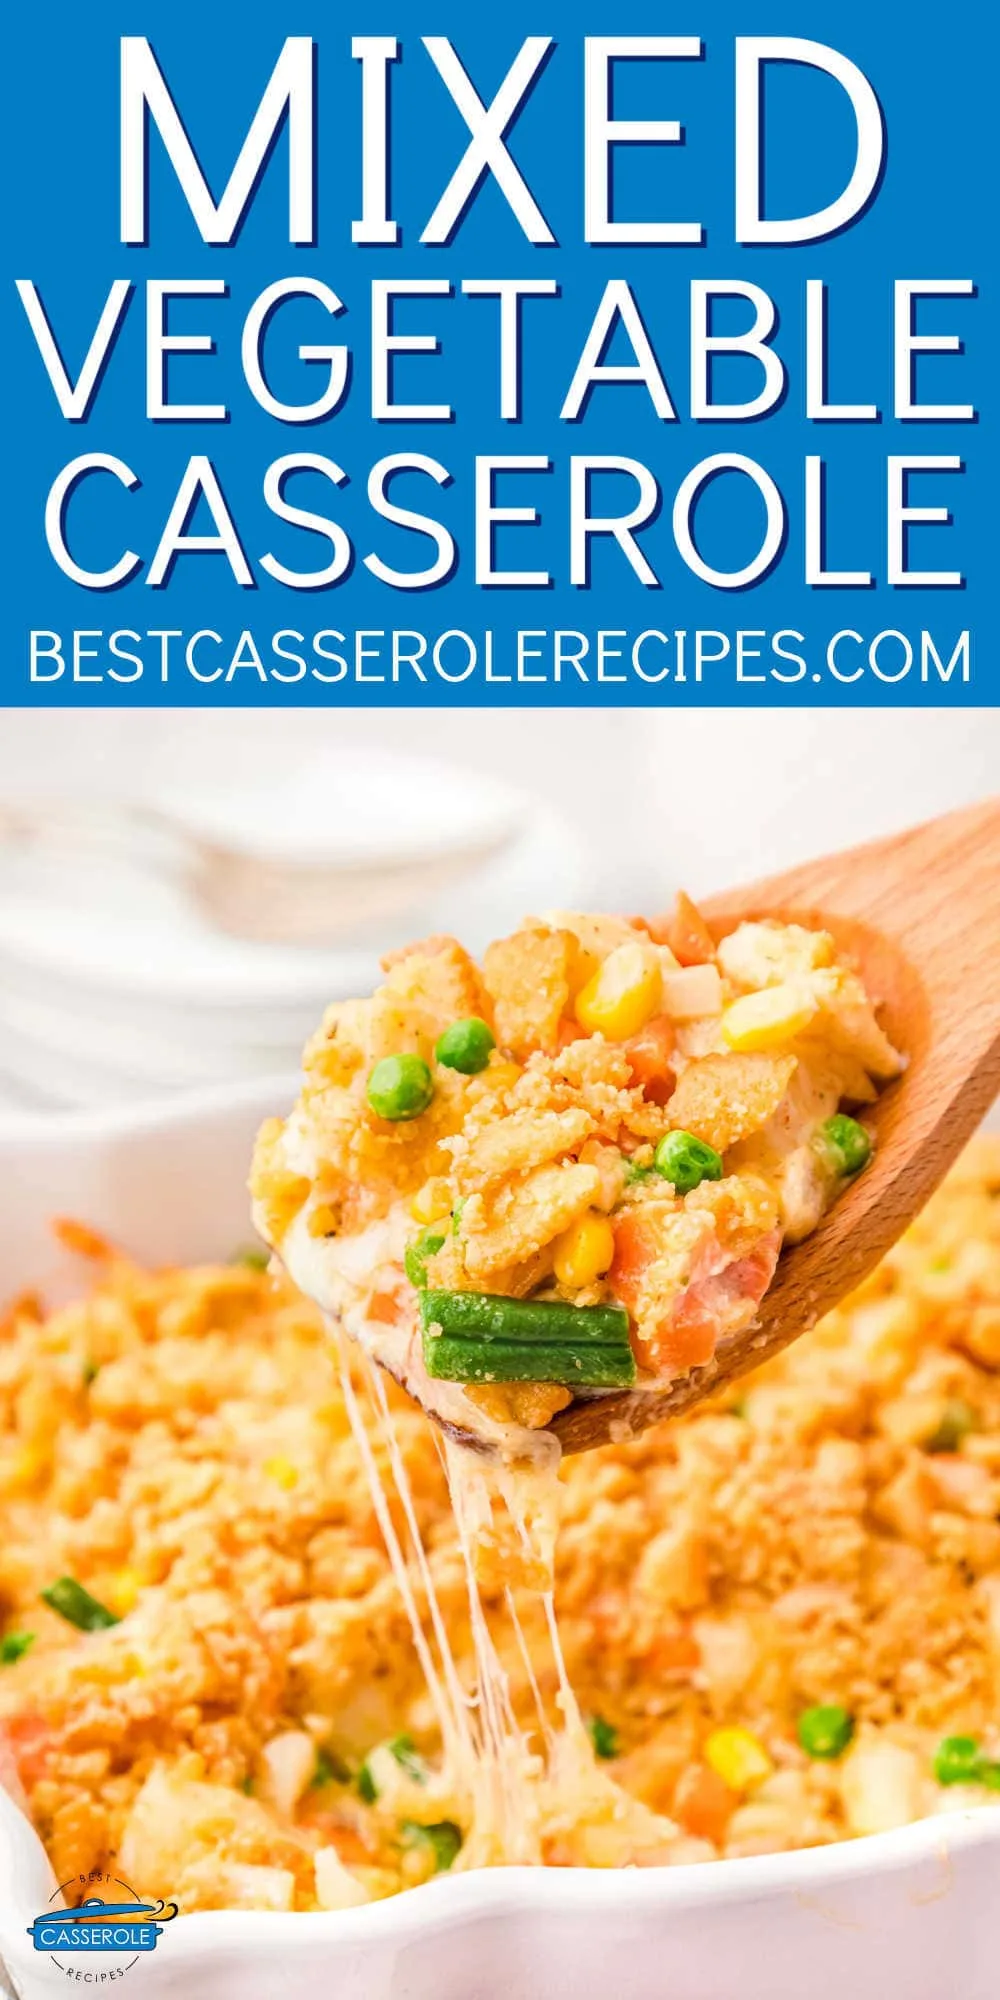 mixed vegetable casserole title banner